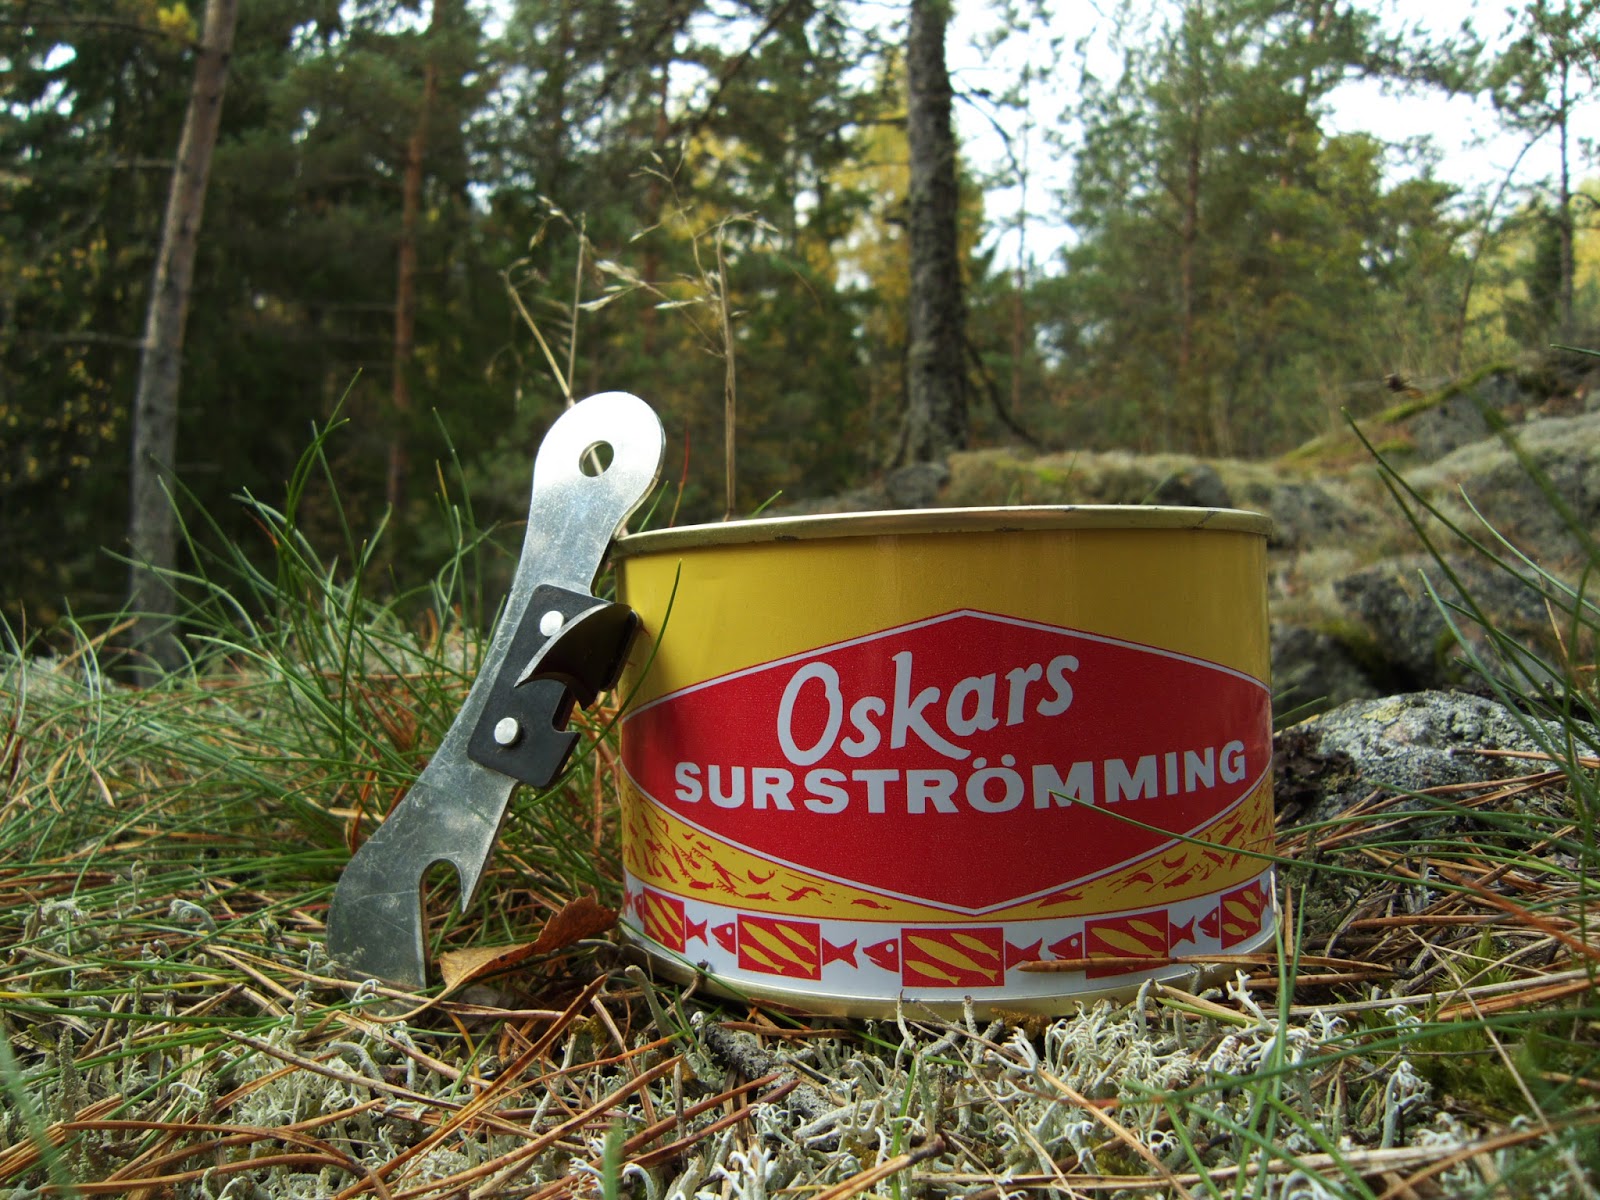 Bienvenue en Europe: Surströmming, une abomination culinaire